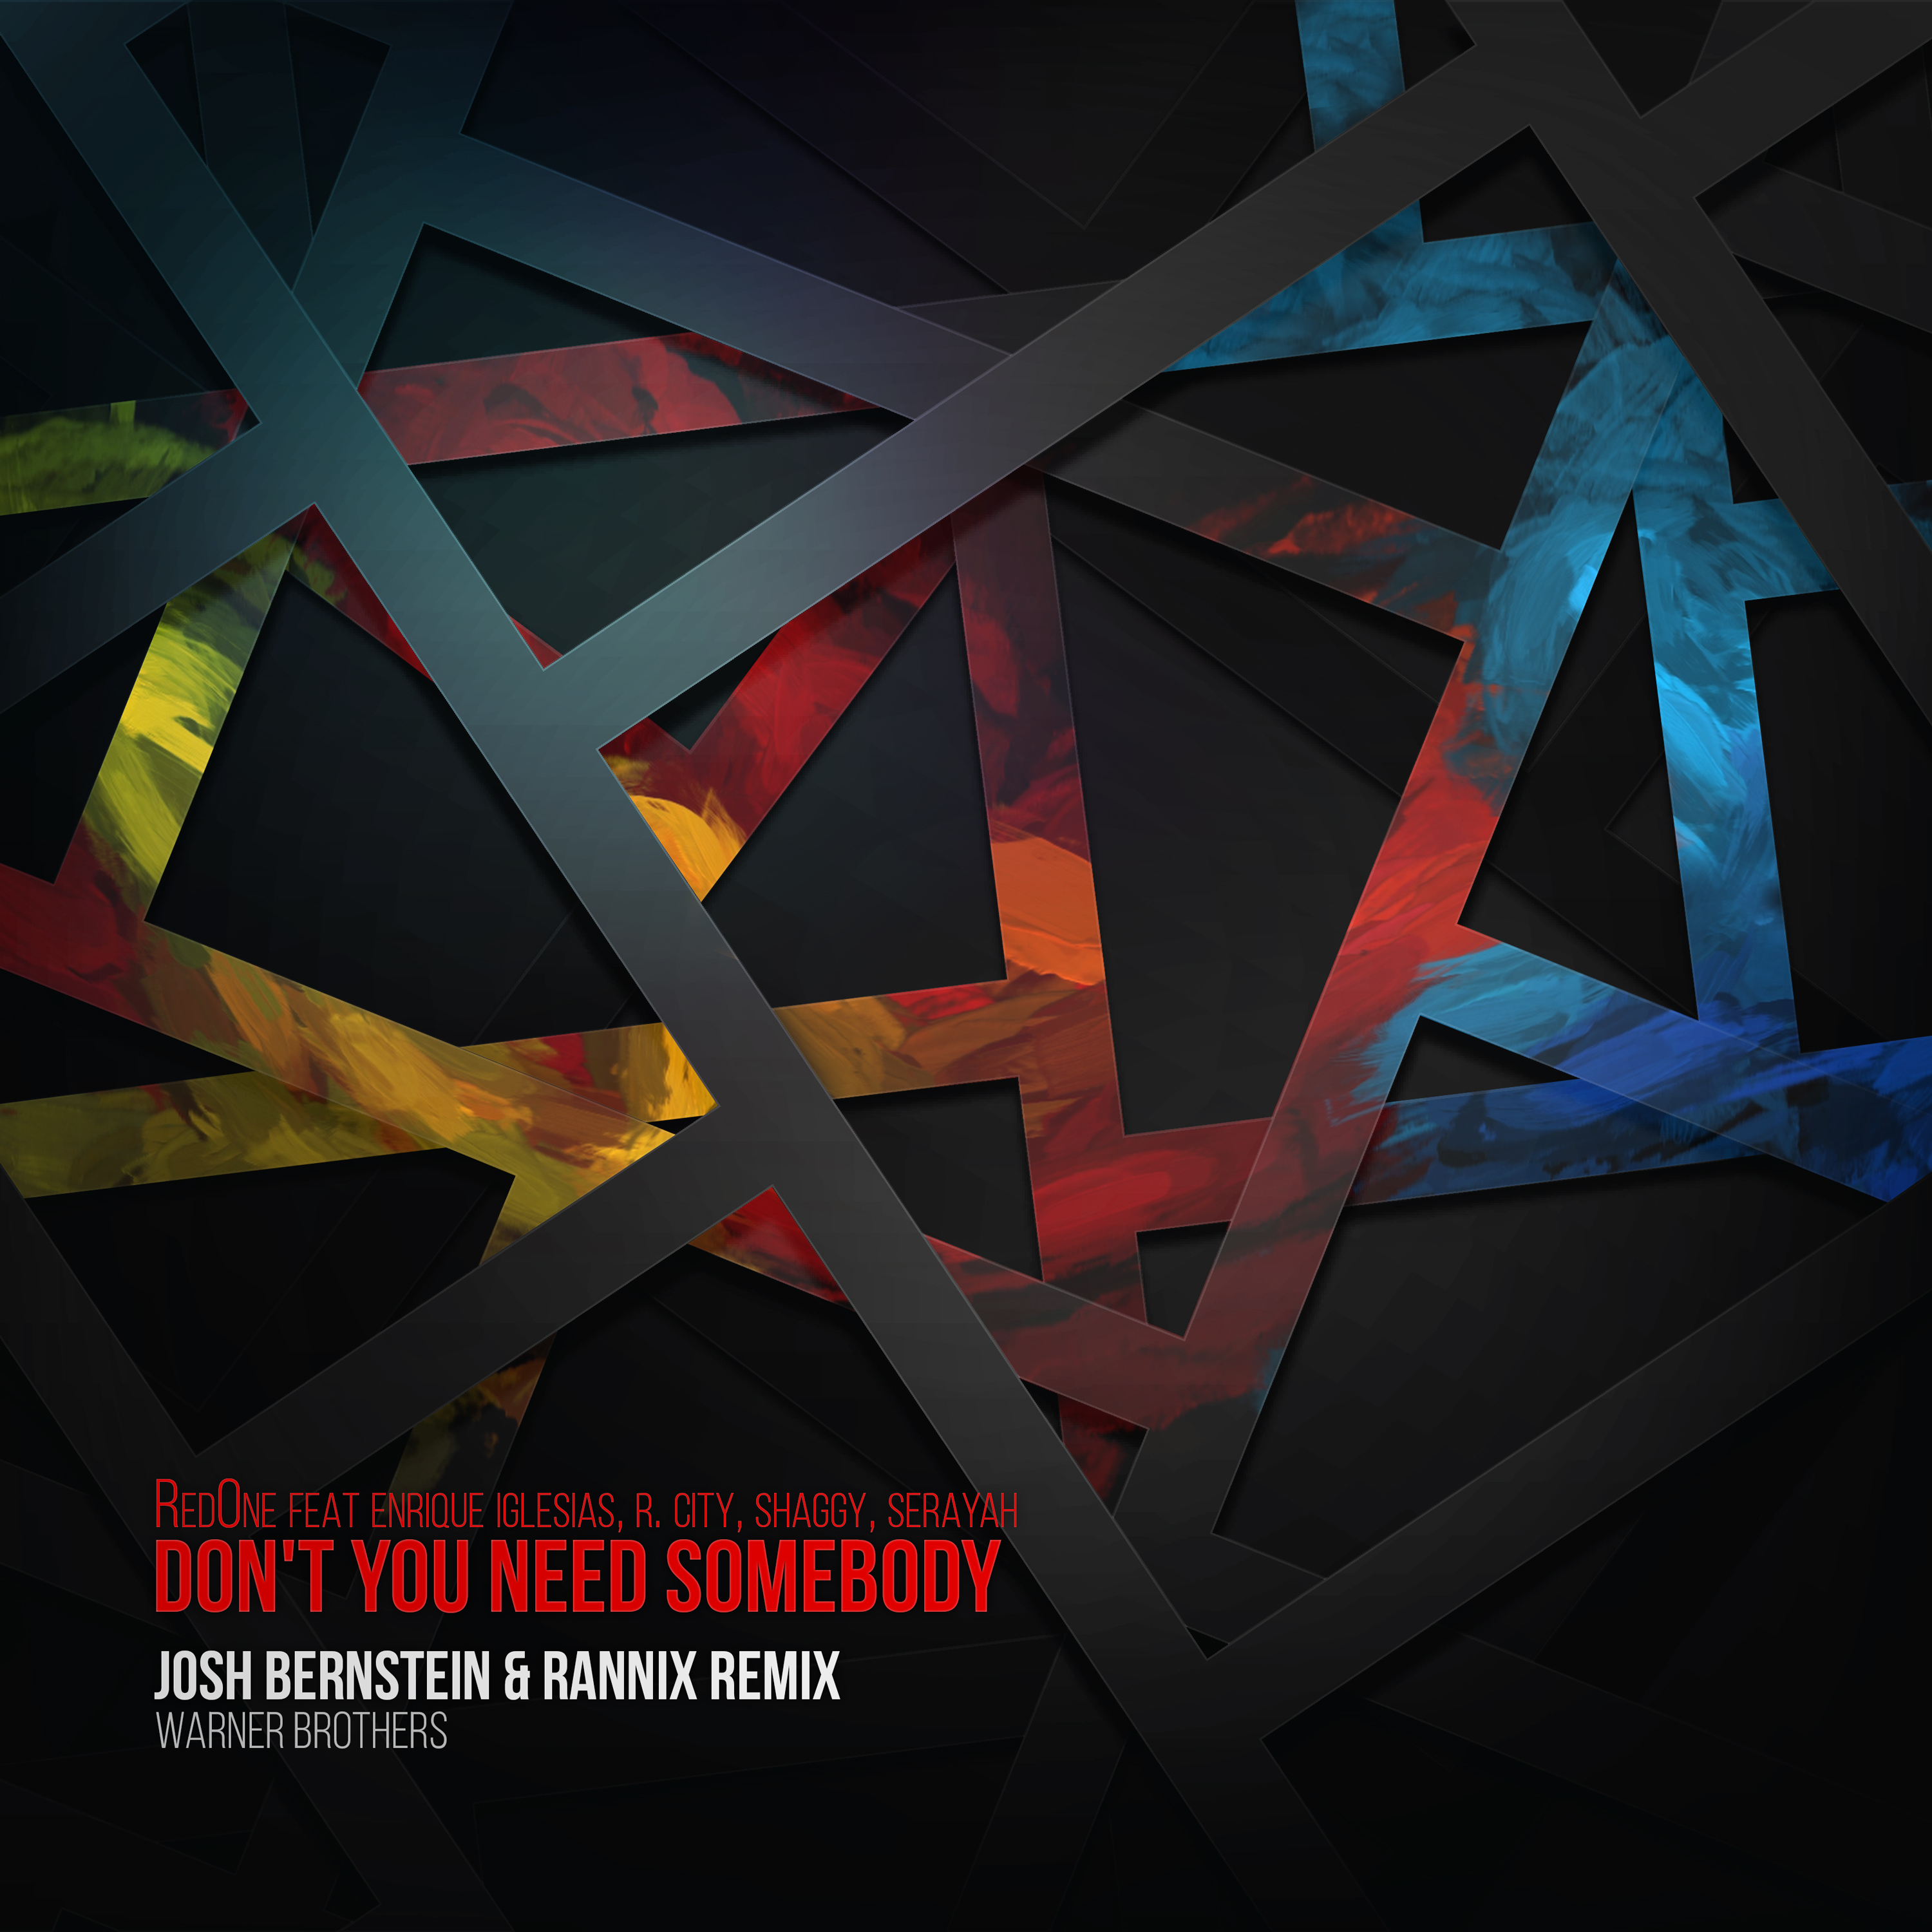 RedOne ft Enrique Iglesias, R. City, Shaggy & Serayah, "Don't You Need Somebody" (Josh Bernstein & Rannix Remix), artwork